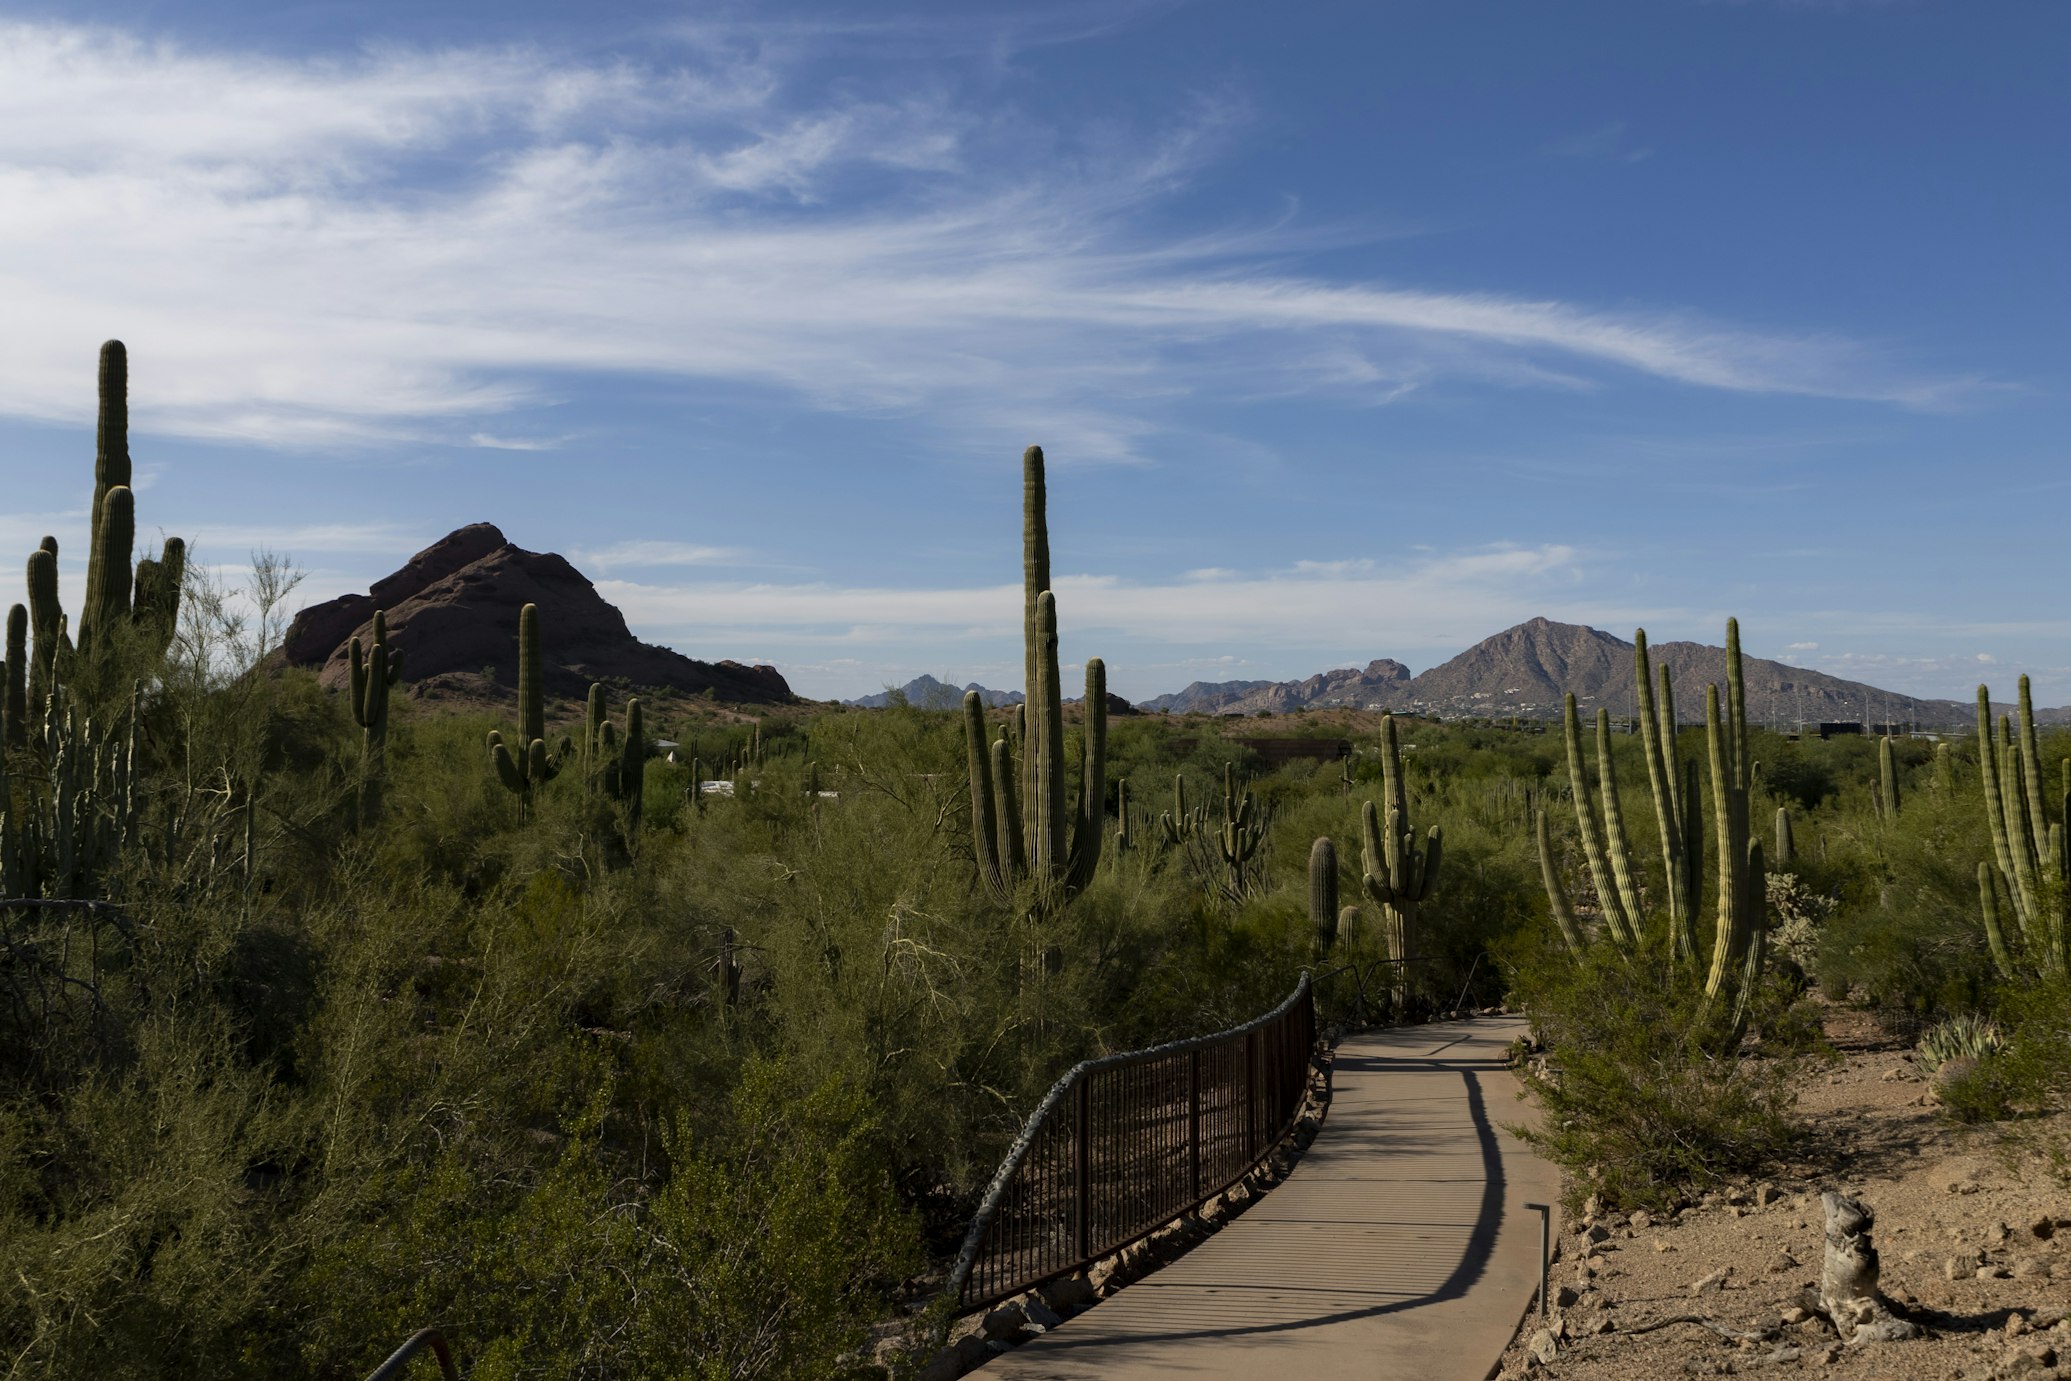 Desert Botanical Garden is a 140-acre botanical garden located in Papago Park, in Phoenix, central Arizona.